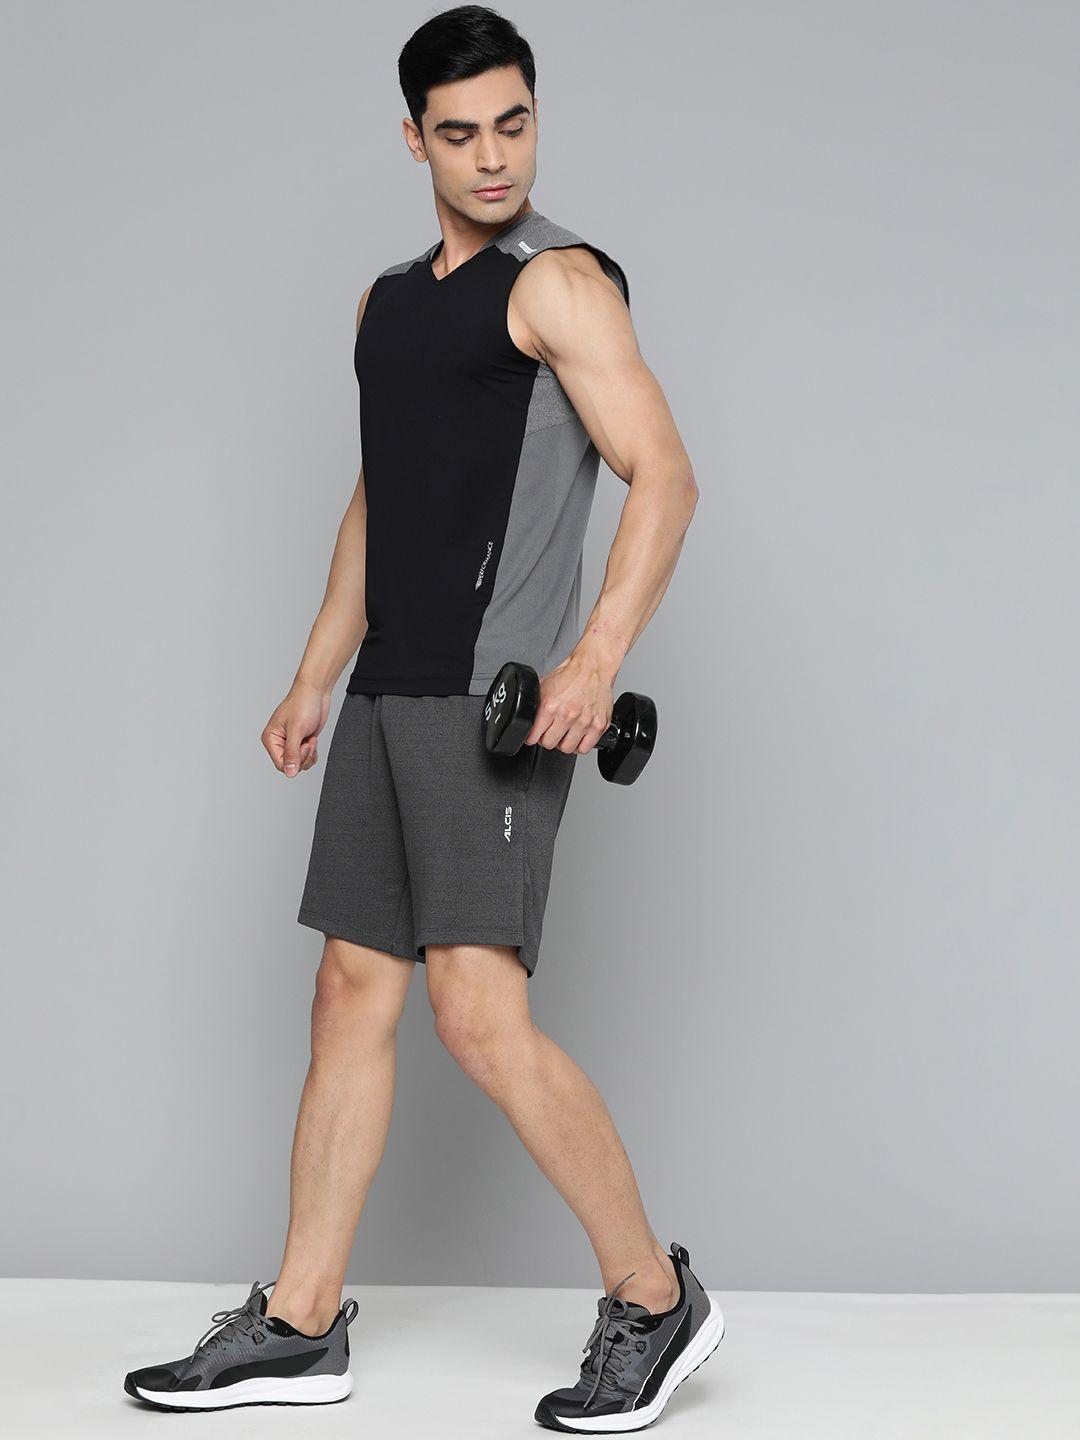 alcis slim fit rapid-dry training or gym sports shorts